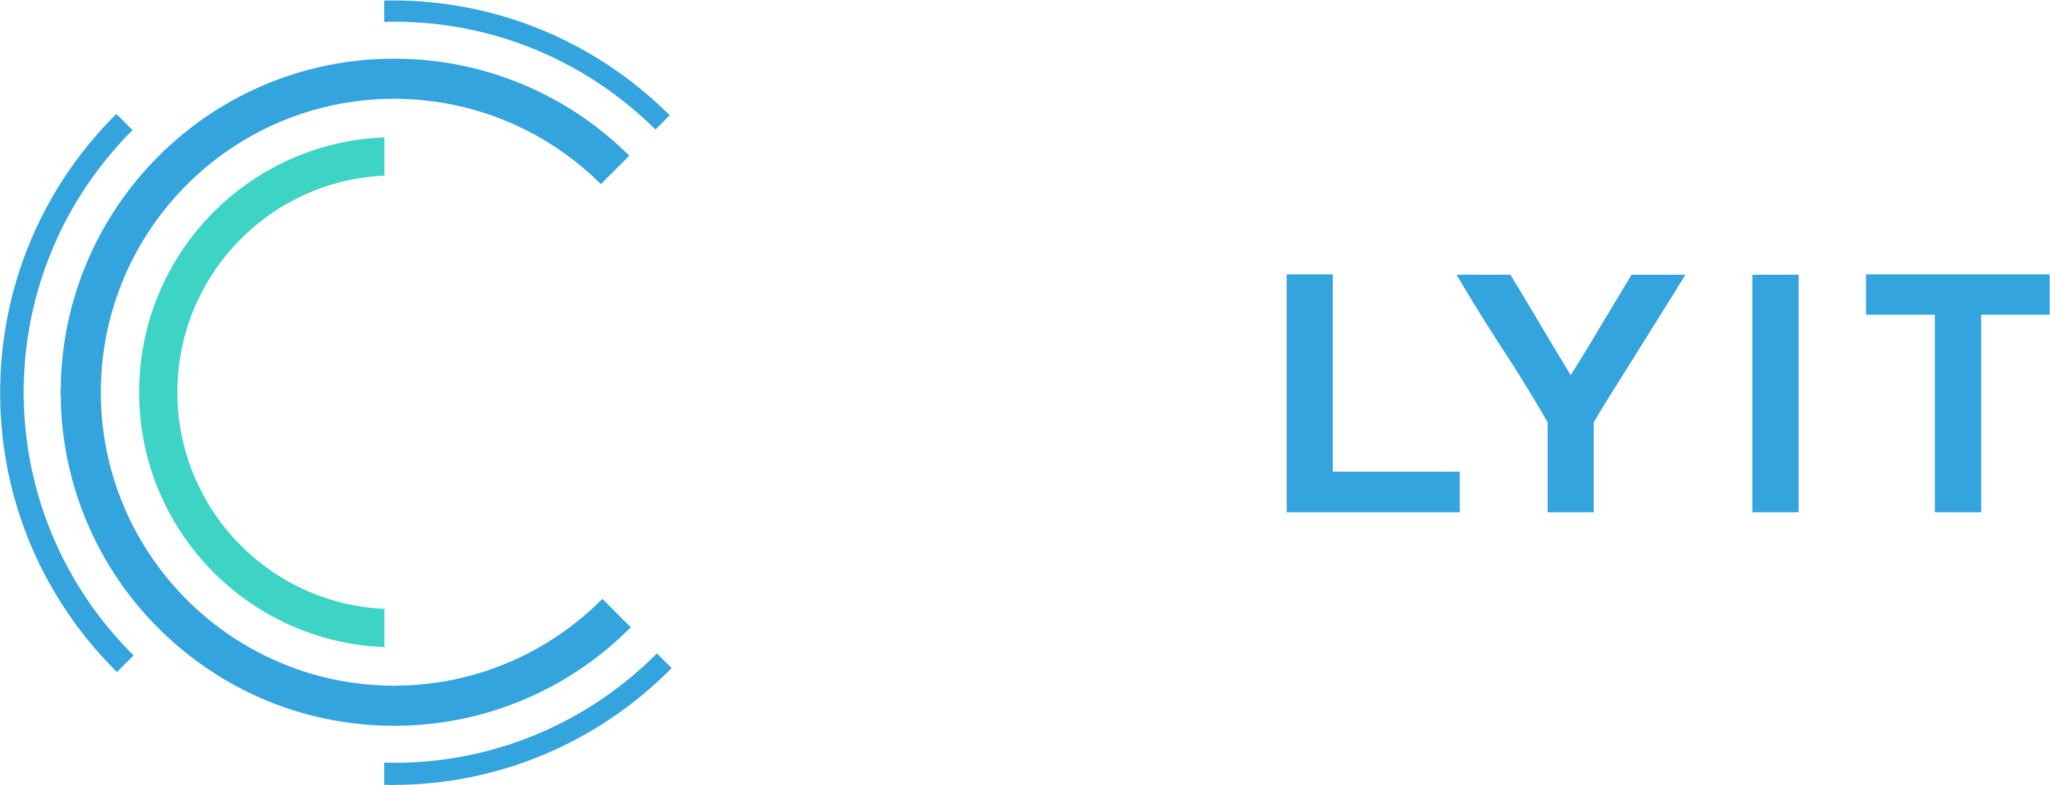 Catalyit logo